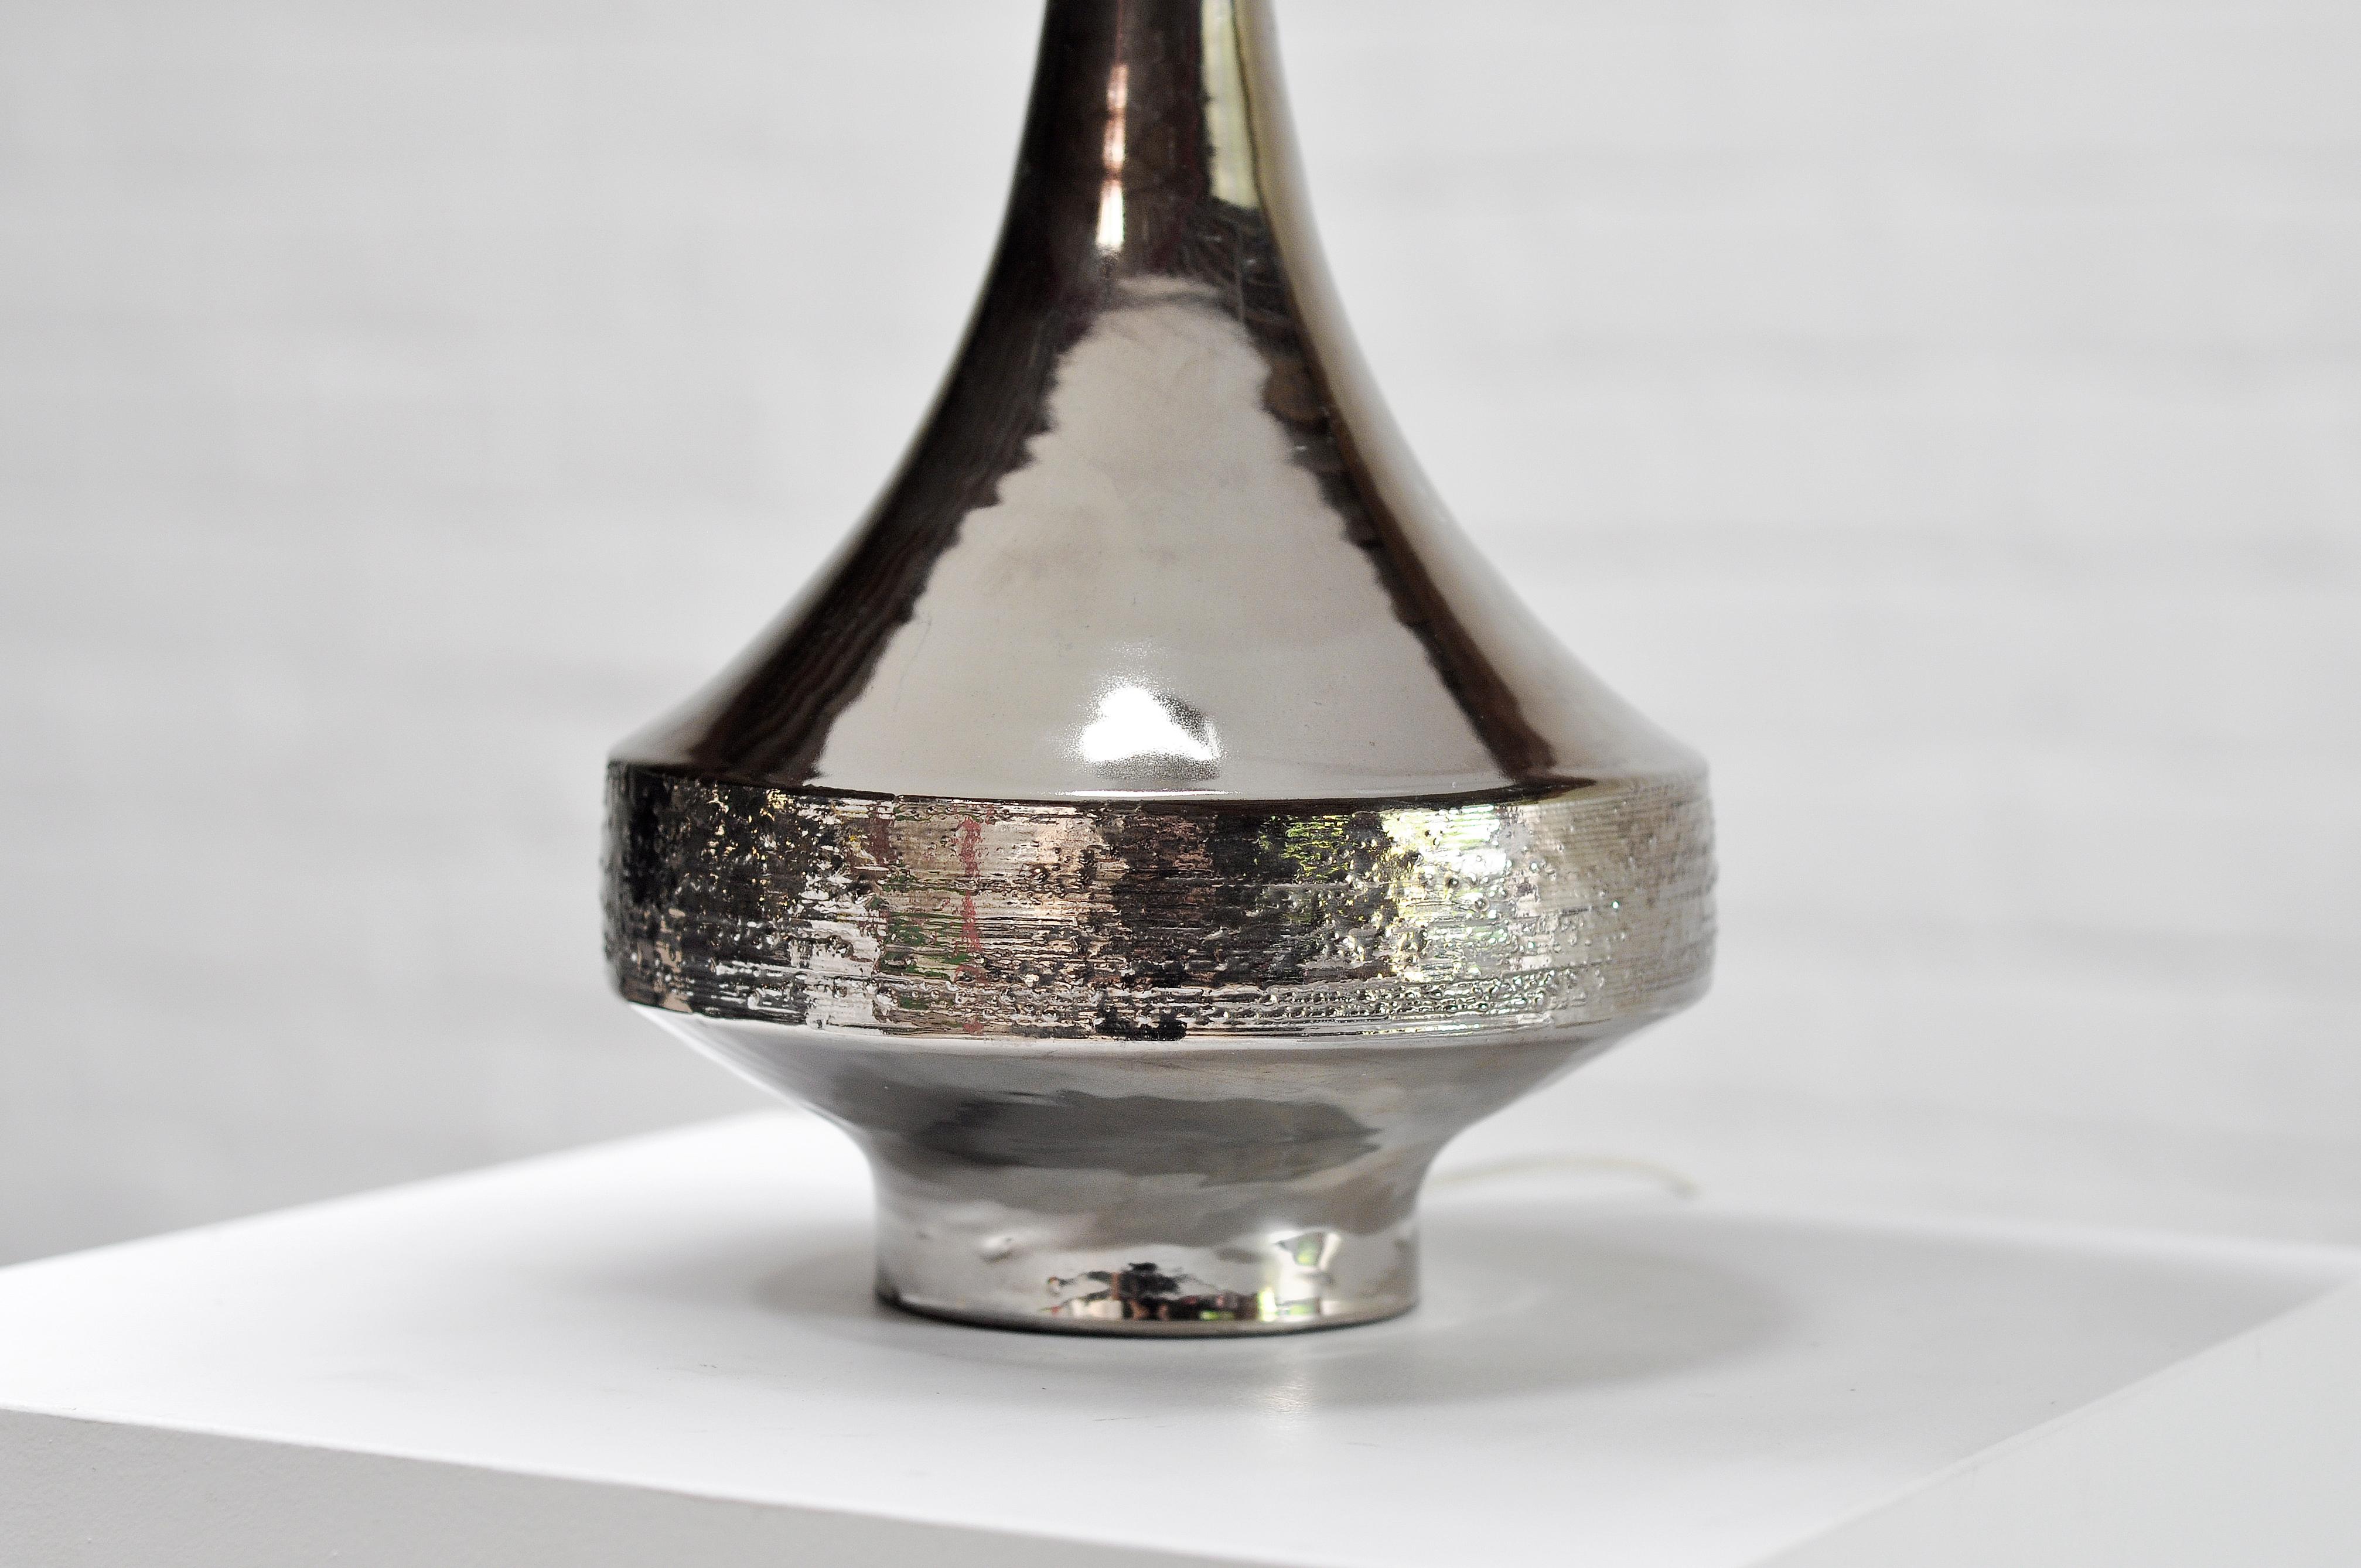 Vintage Silver Enamelled Ceramic Table Lamp By Perignem, 1970s For Sale 4